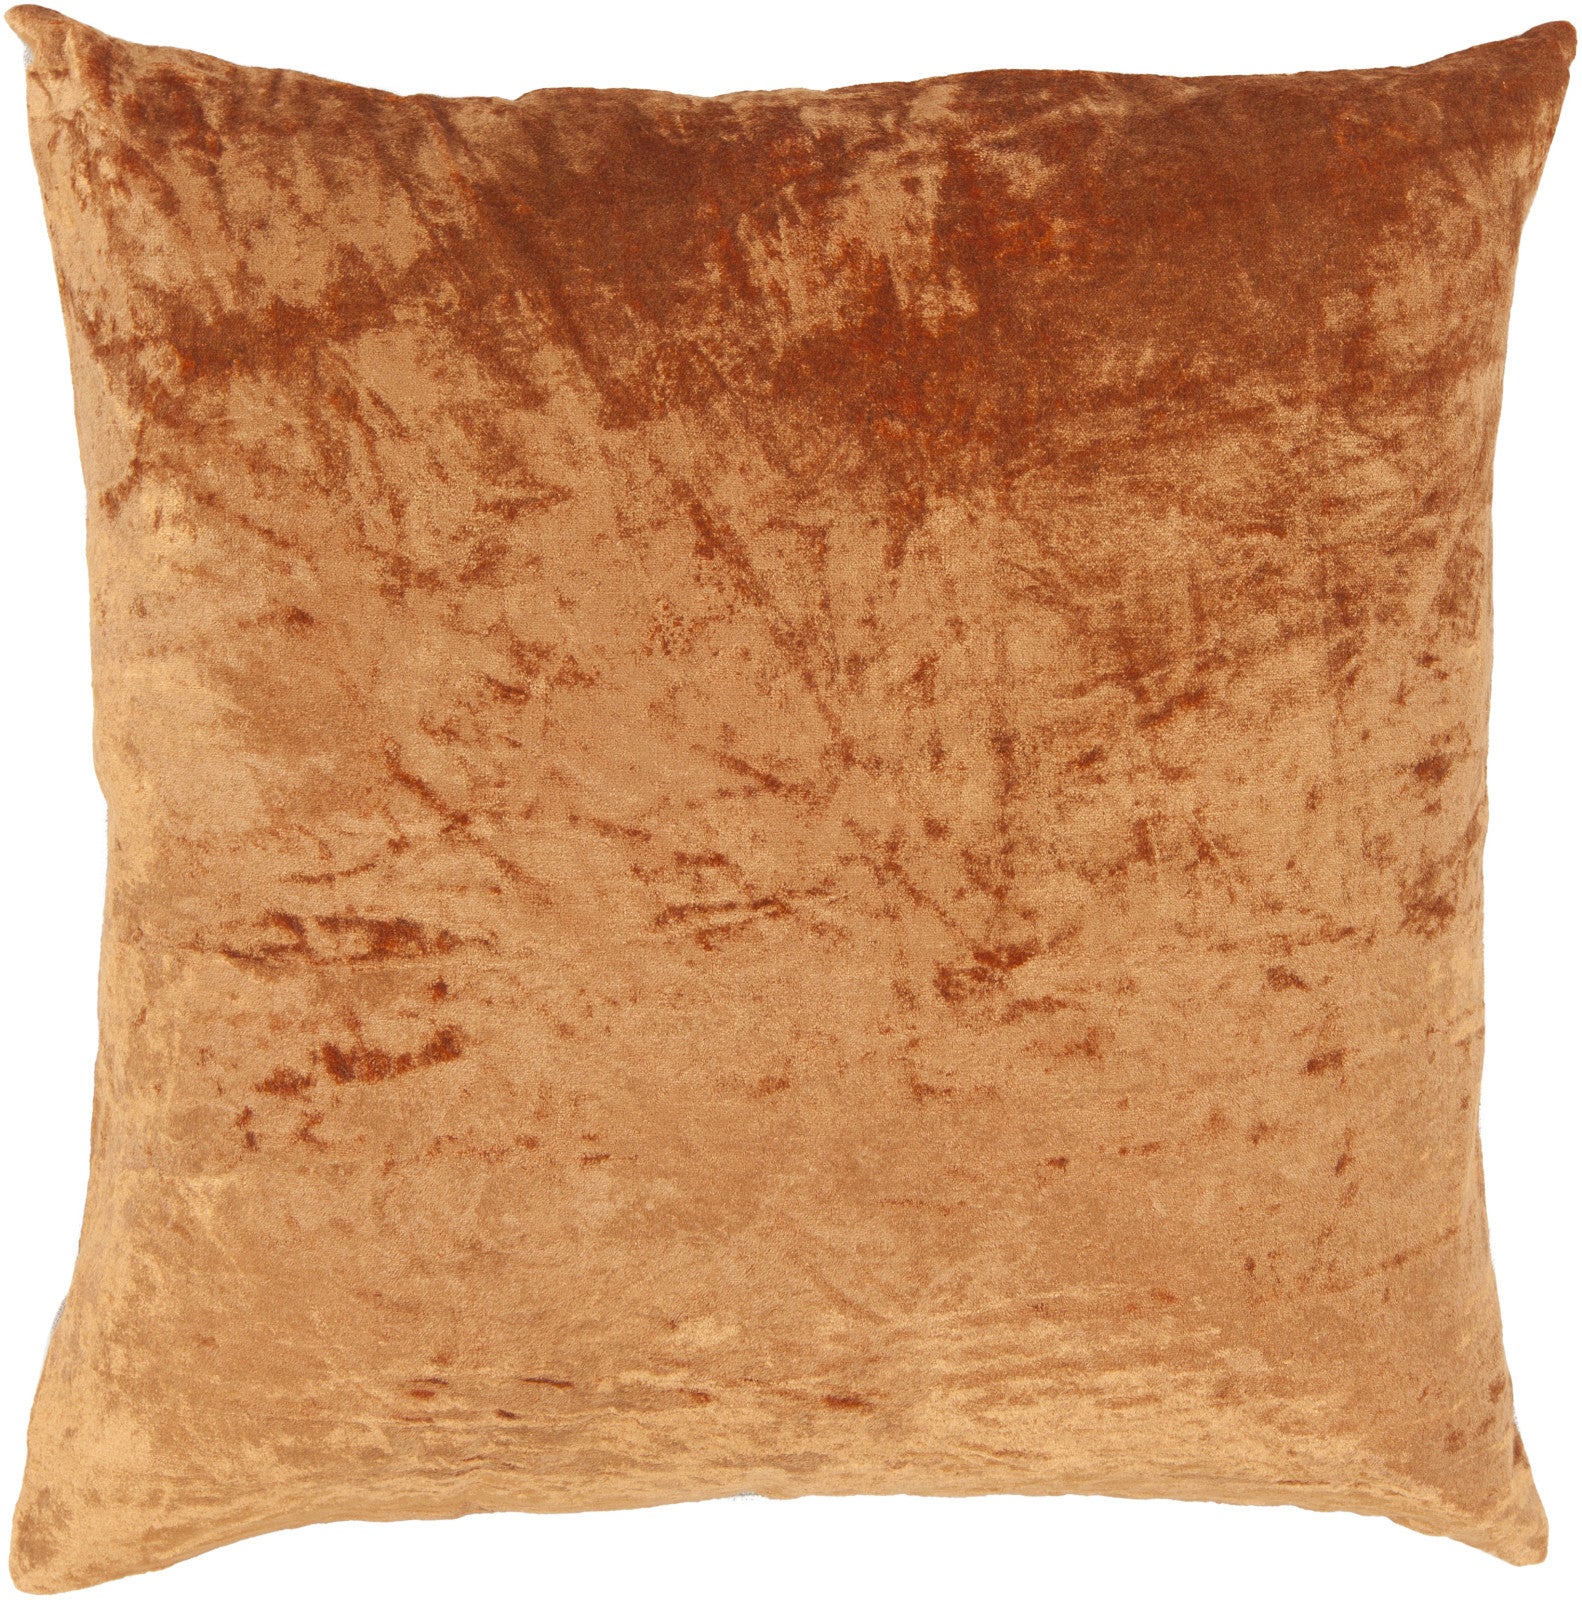 Chandra Pillows CUS-28048 Copper main image